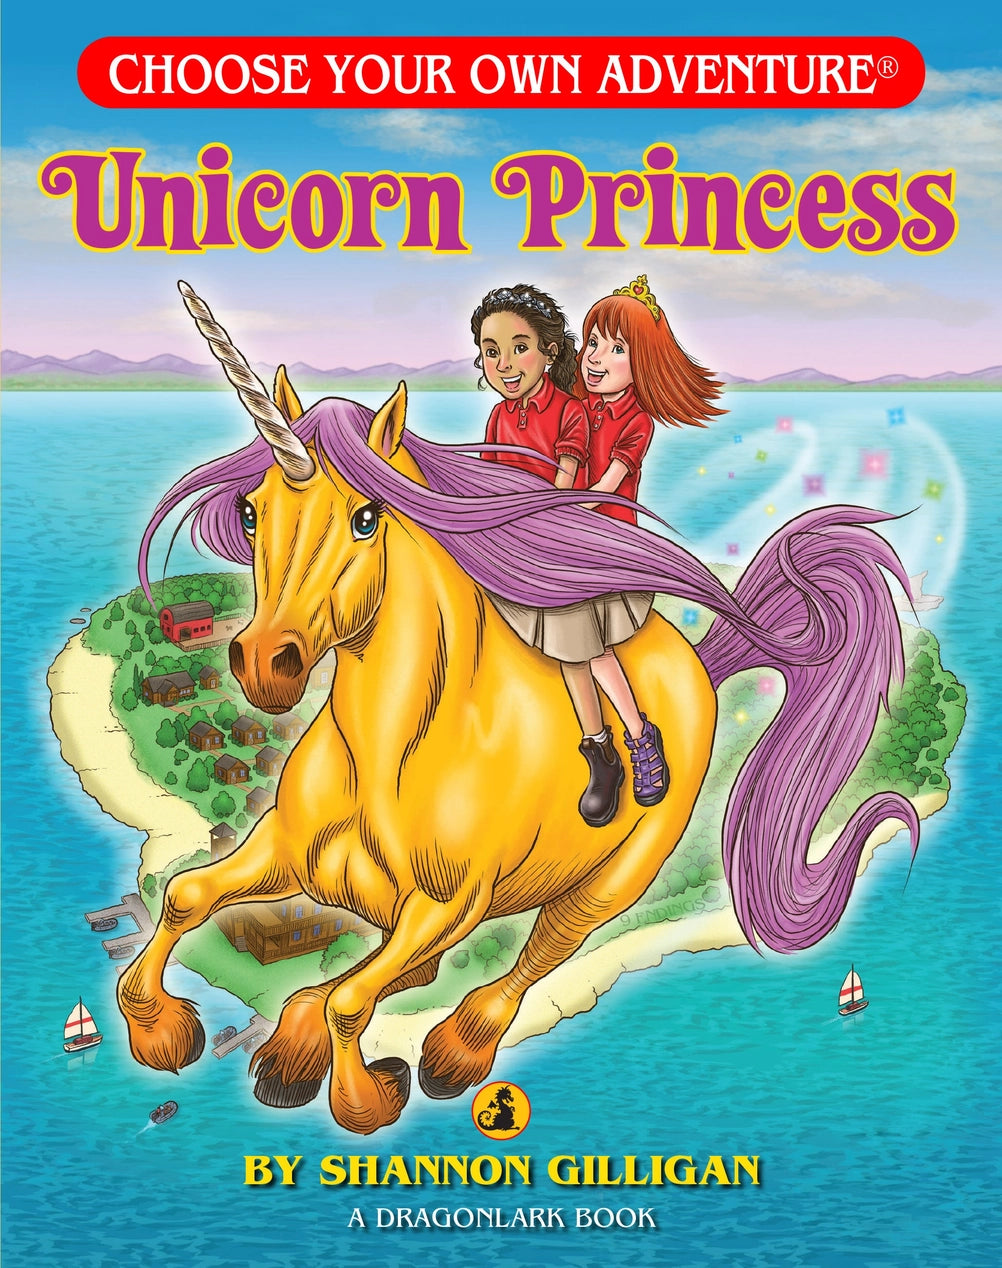 cover art of unicorn princess